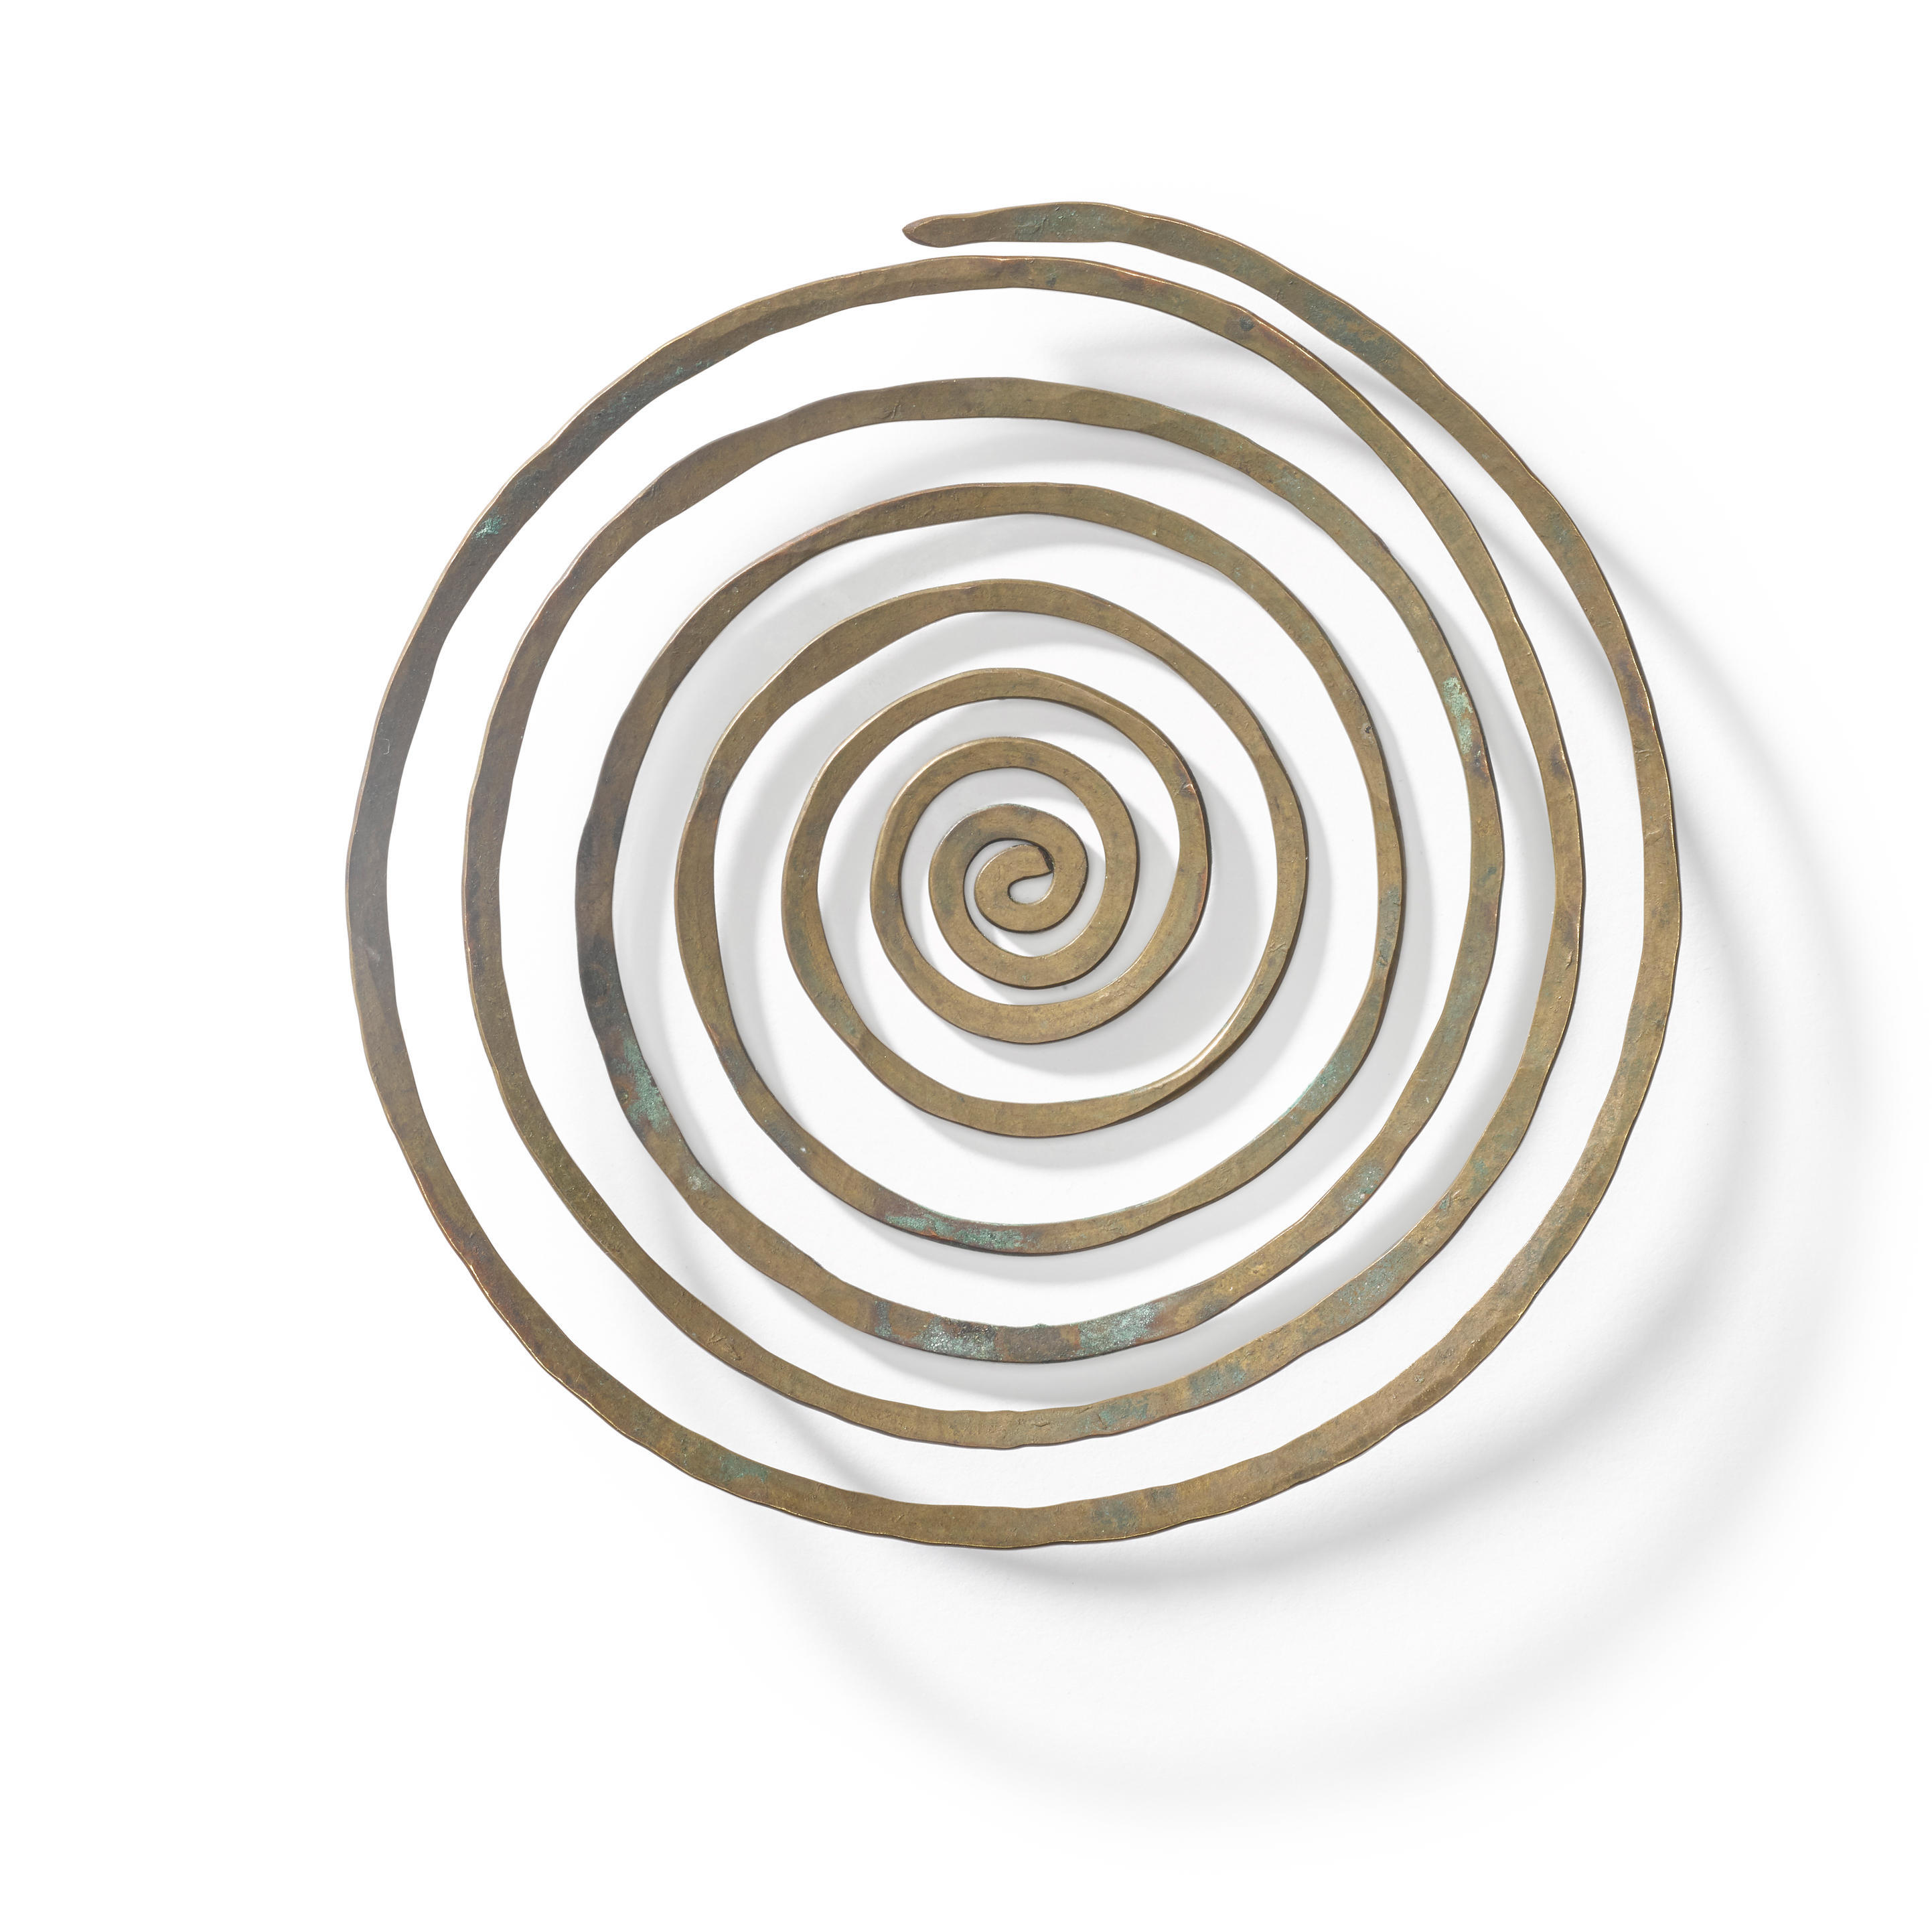 Alexander Calder - The Spiral (maquette) 5/6